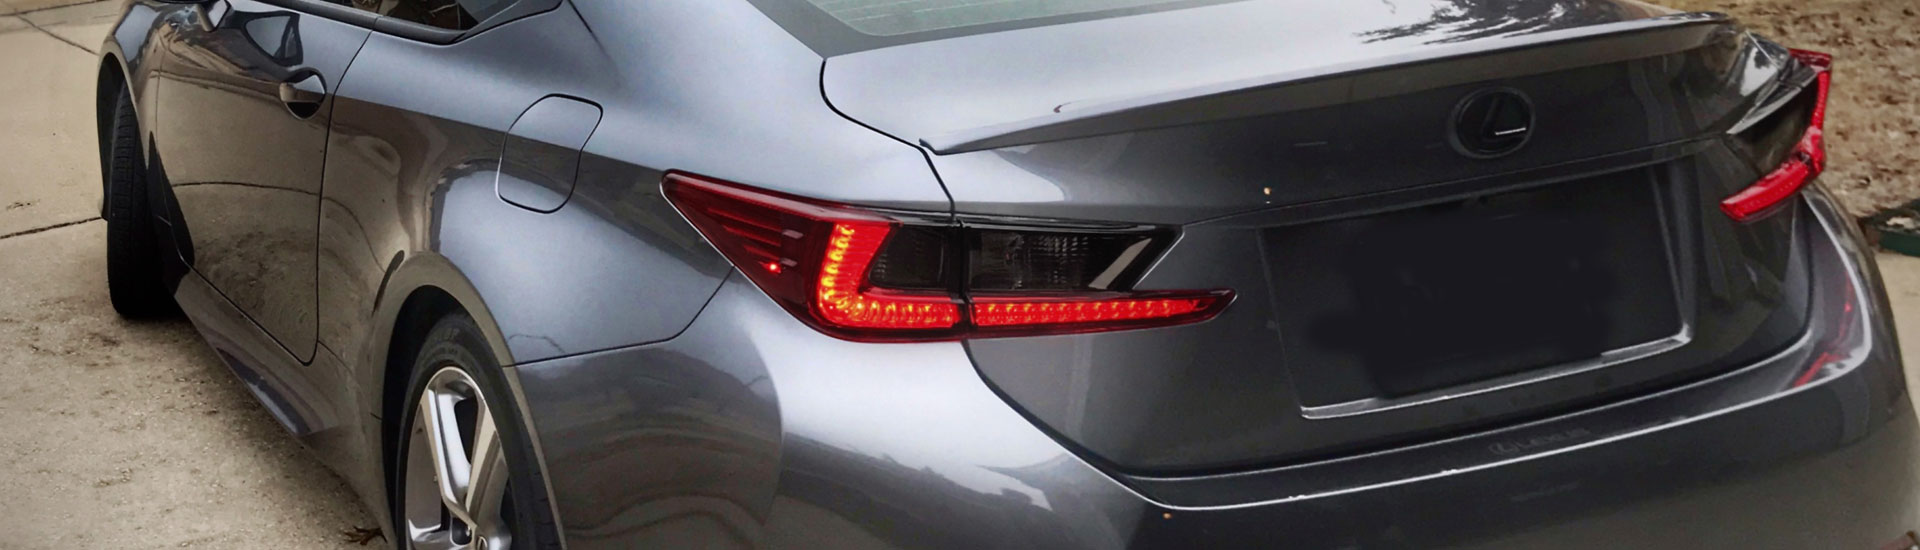 Lexus Tail Light Tint Covers